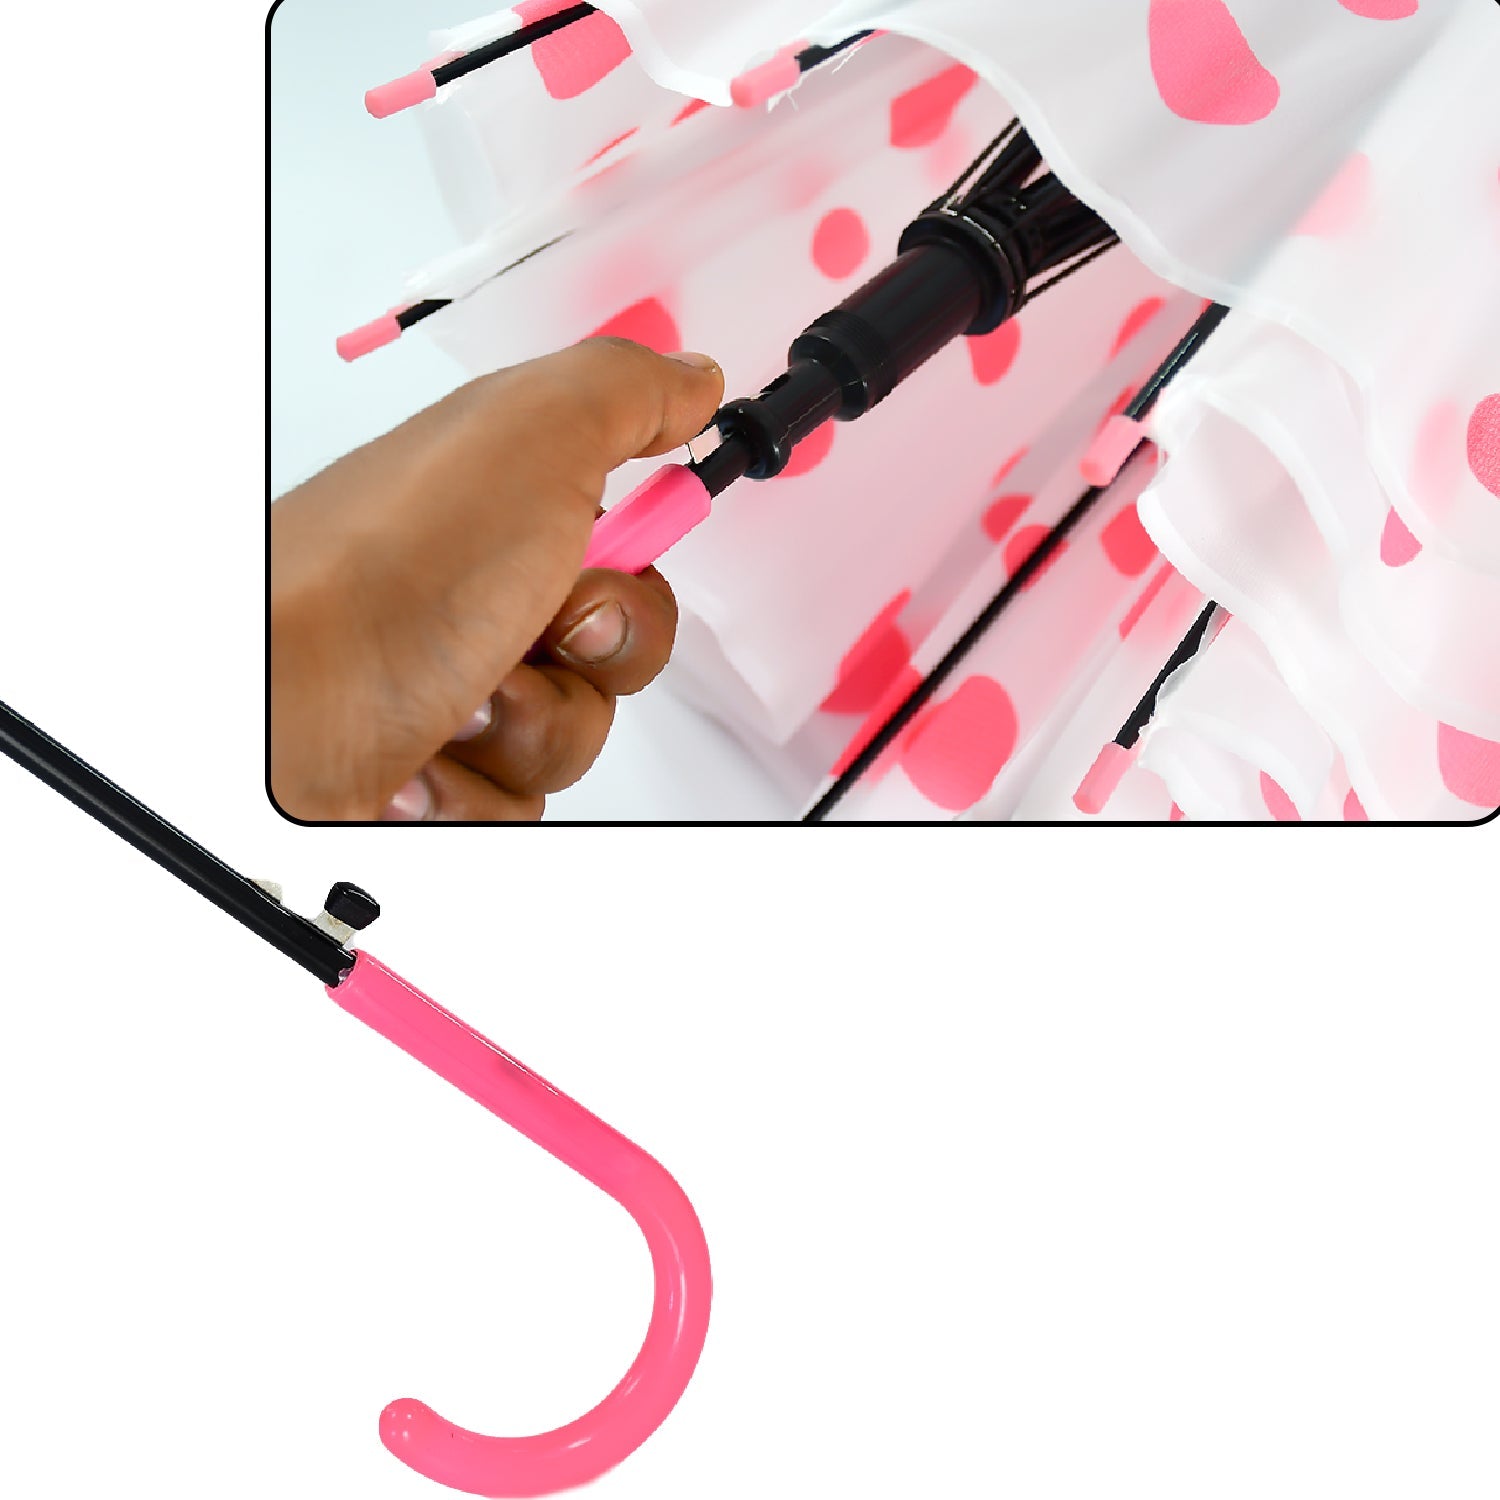 6258 Dot Printed Umbrella for Men and Women Multicolor 